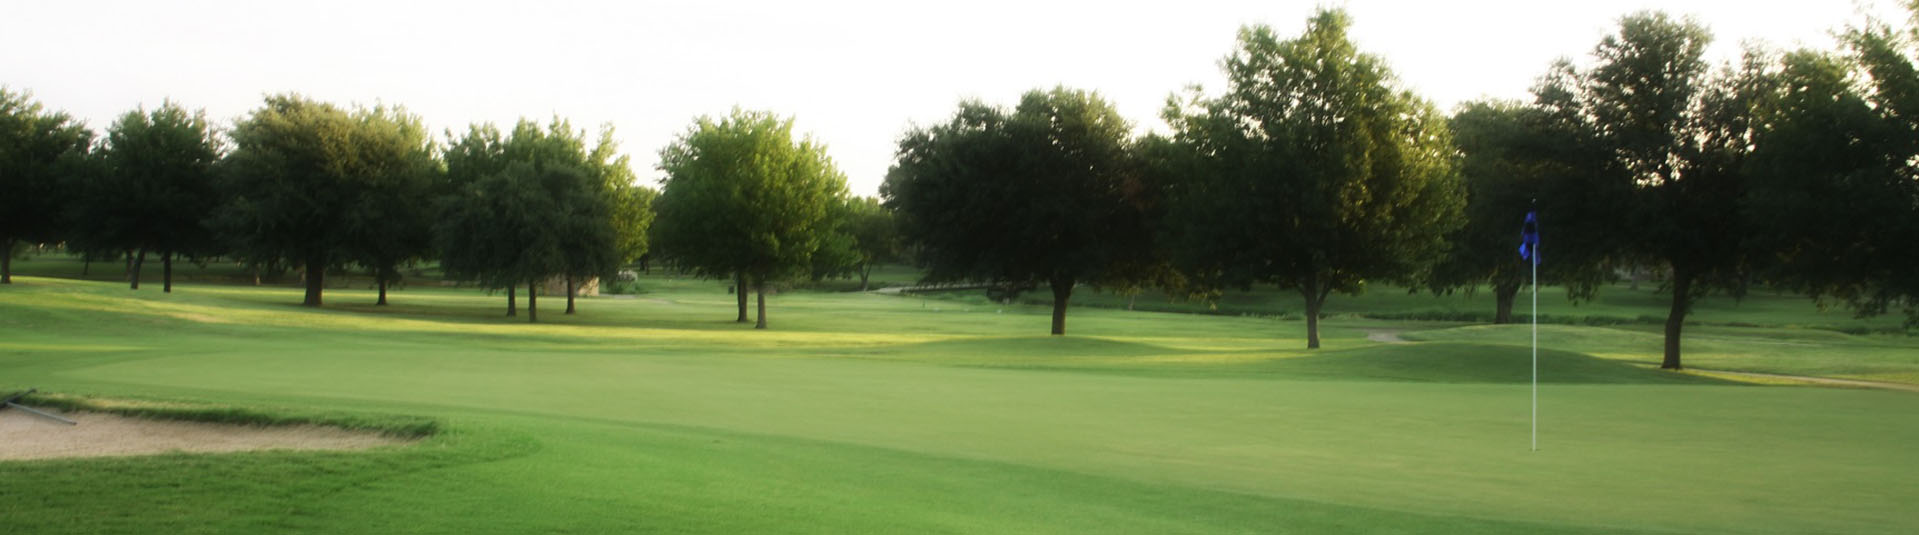 Duck Creek Golf Club: Home - Garland